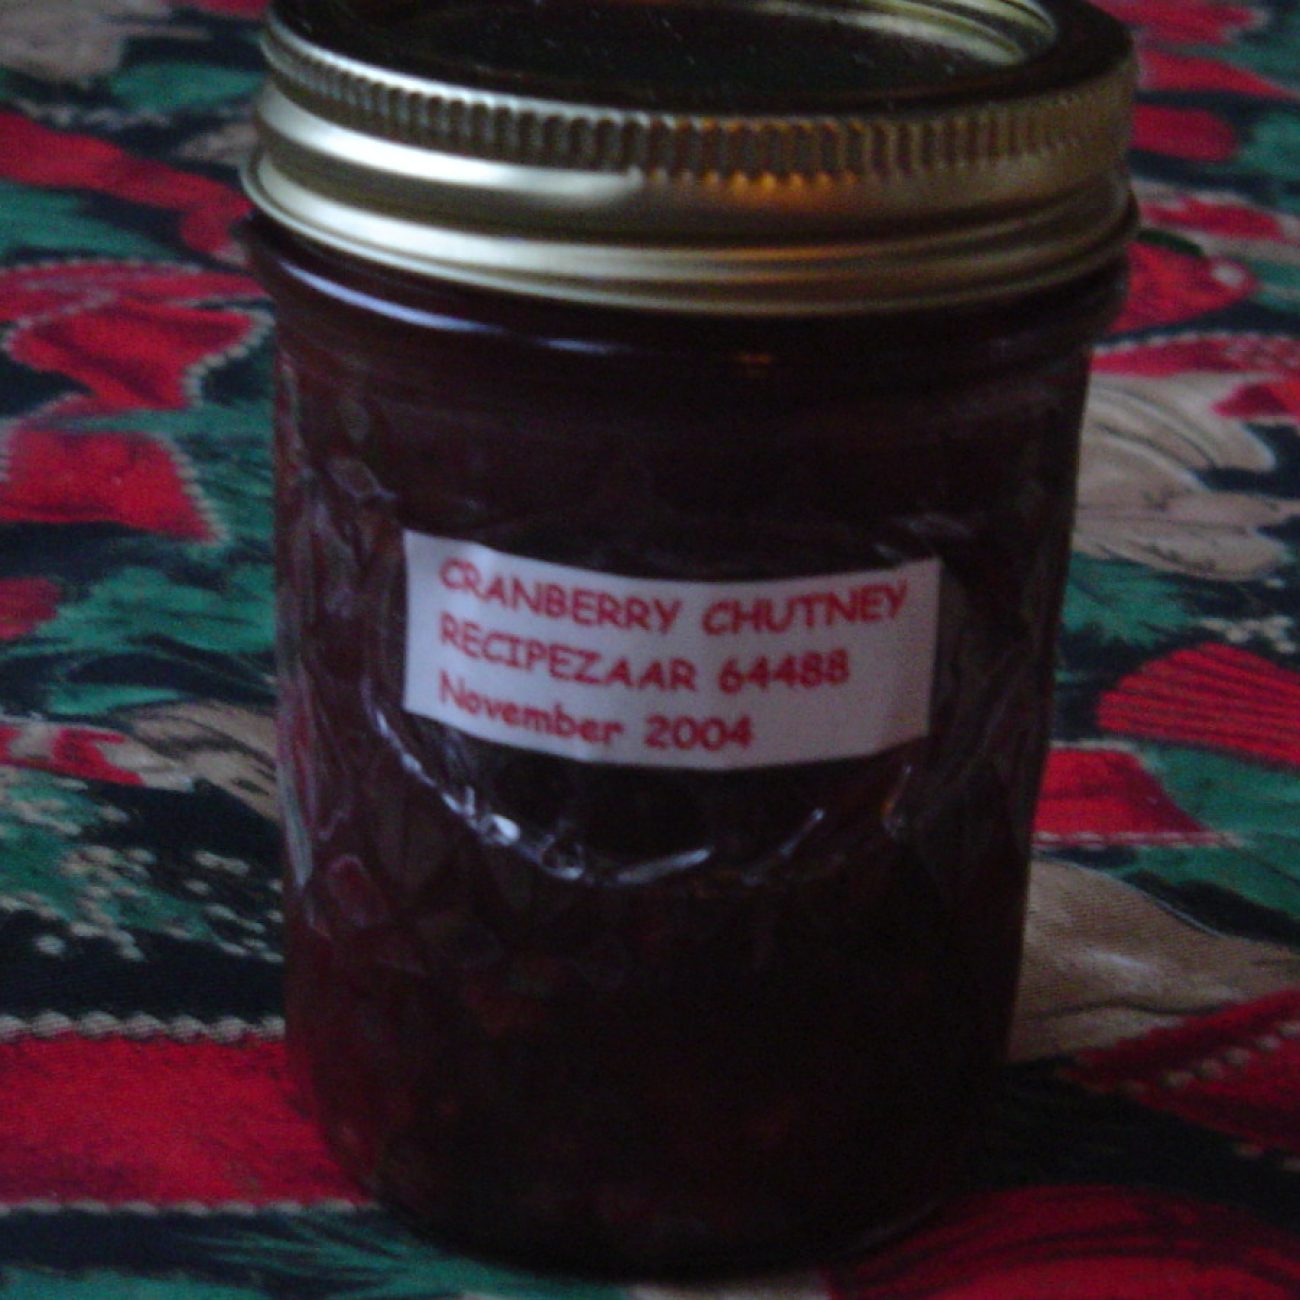 Seasonal Cranberry Chutney